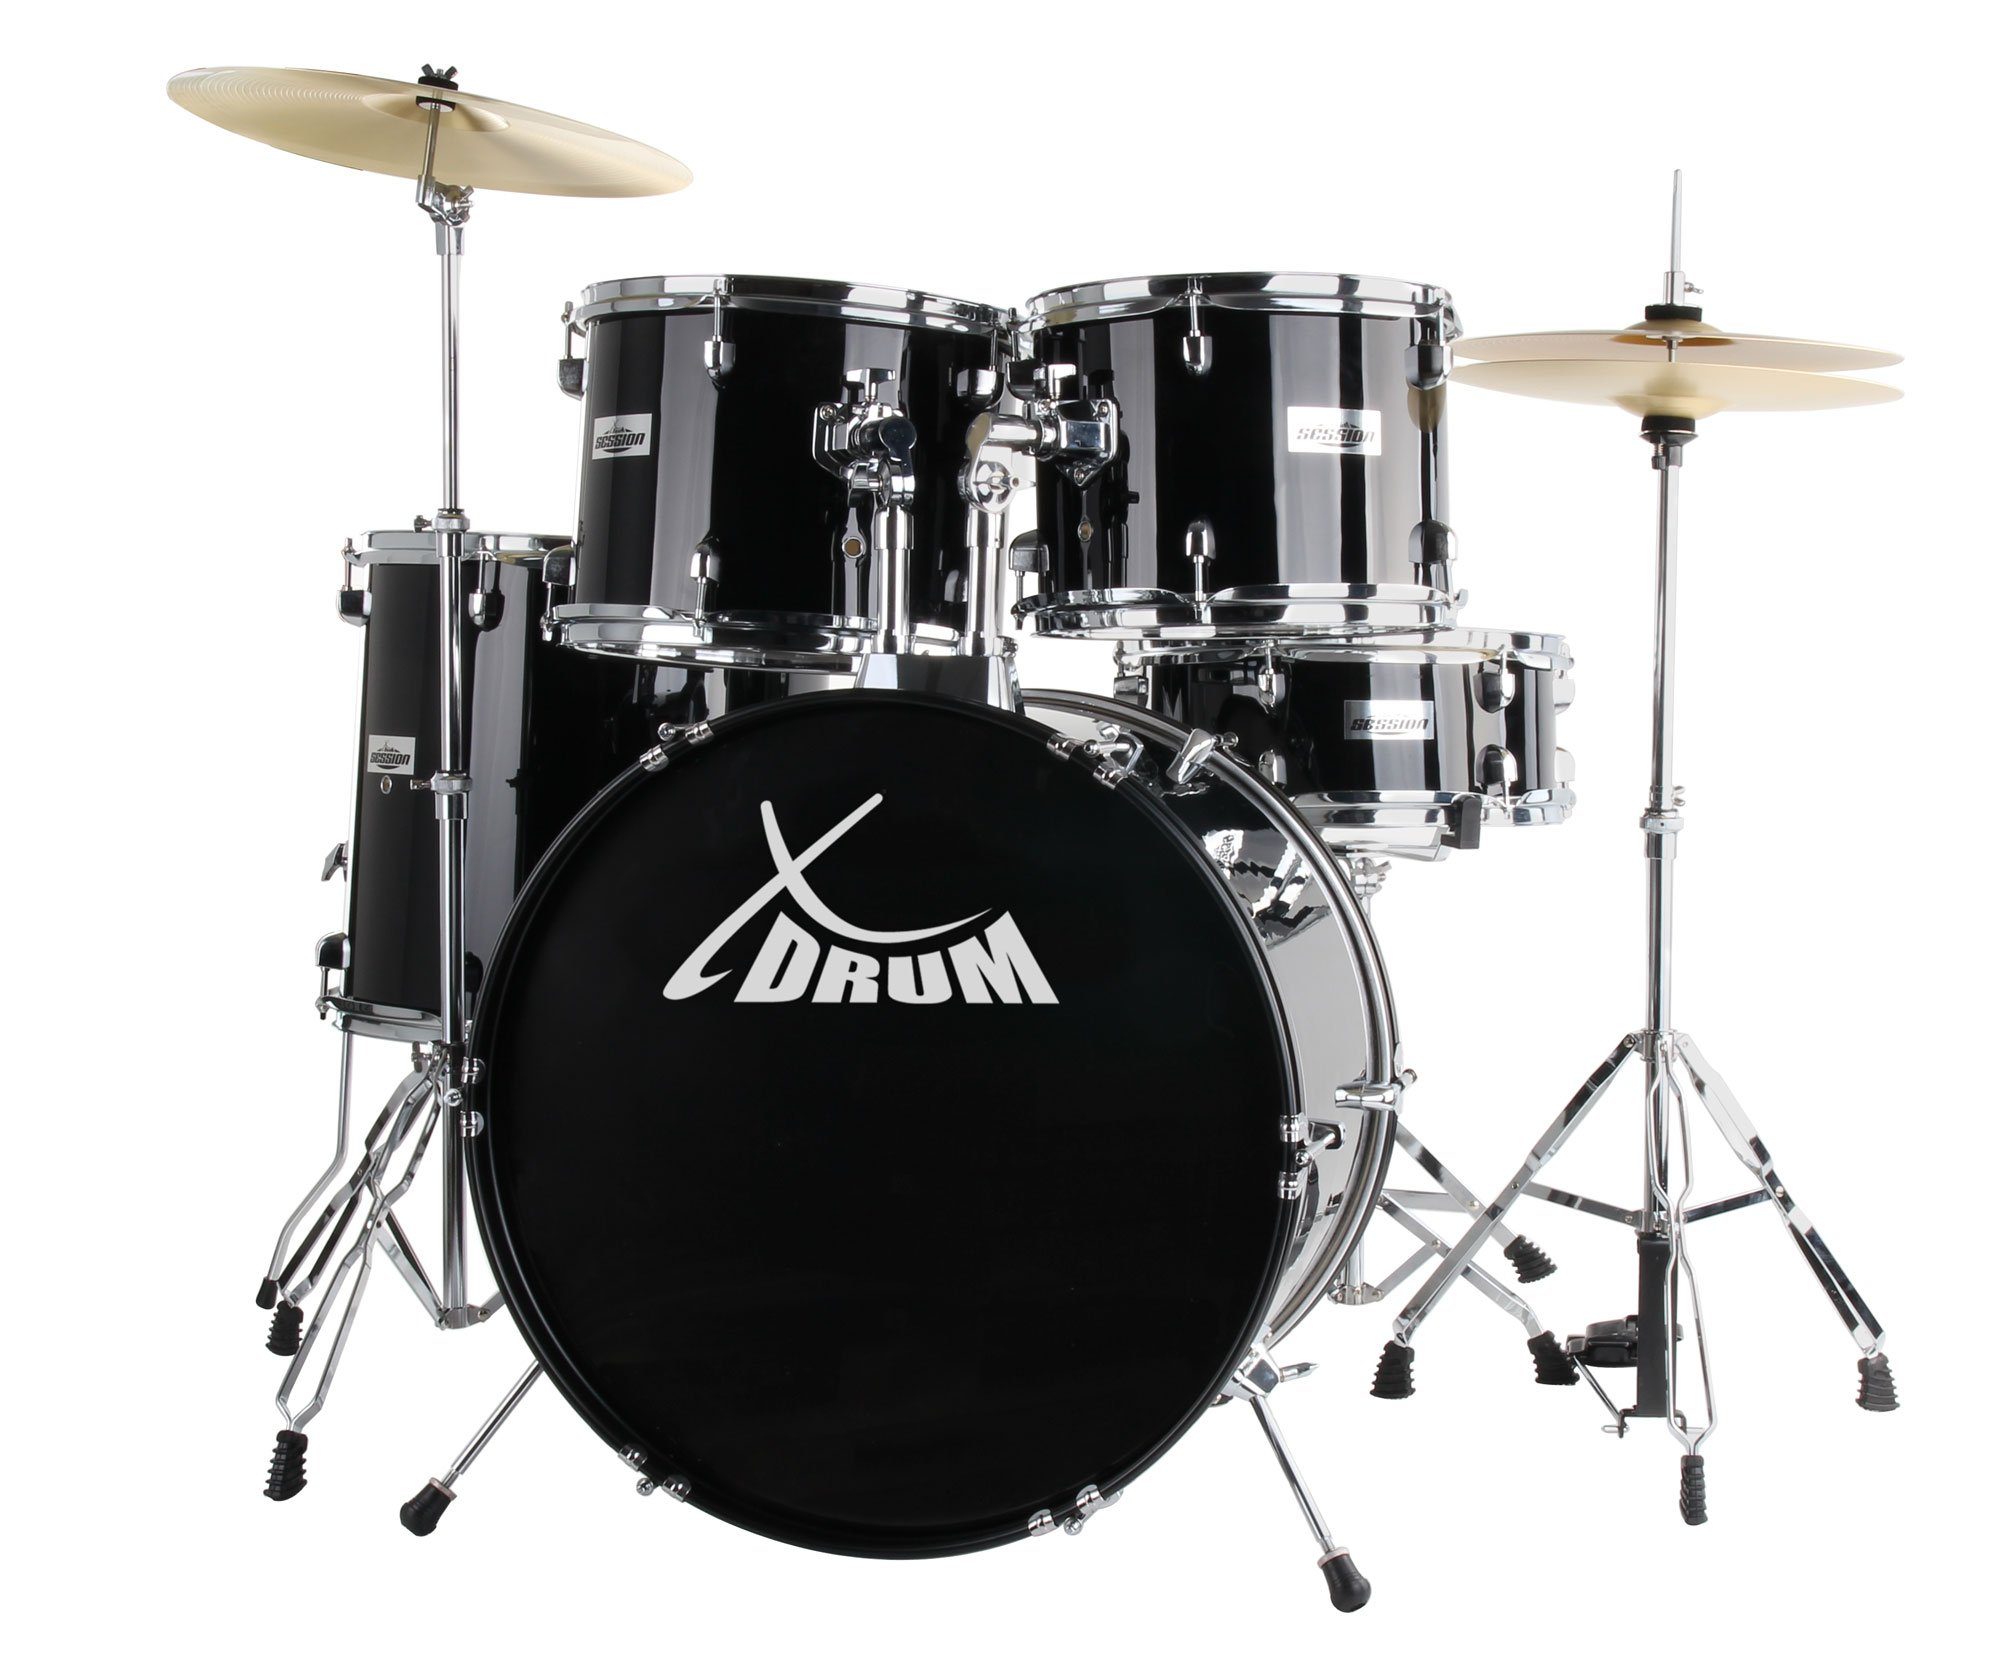 XDrum Schlagzeug Semi 22" Standard,Komplettes Drumset, inkl. Hocker & Drumsticks, Kesselgrößen: 22", 12", 13", 16", 14" Snare